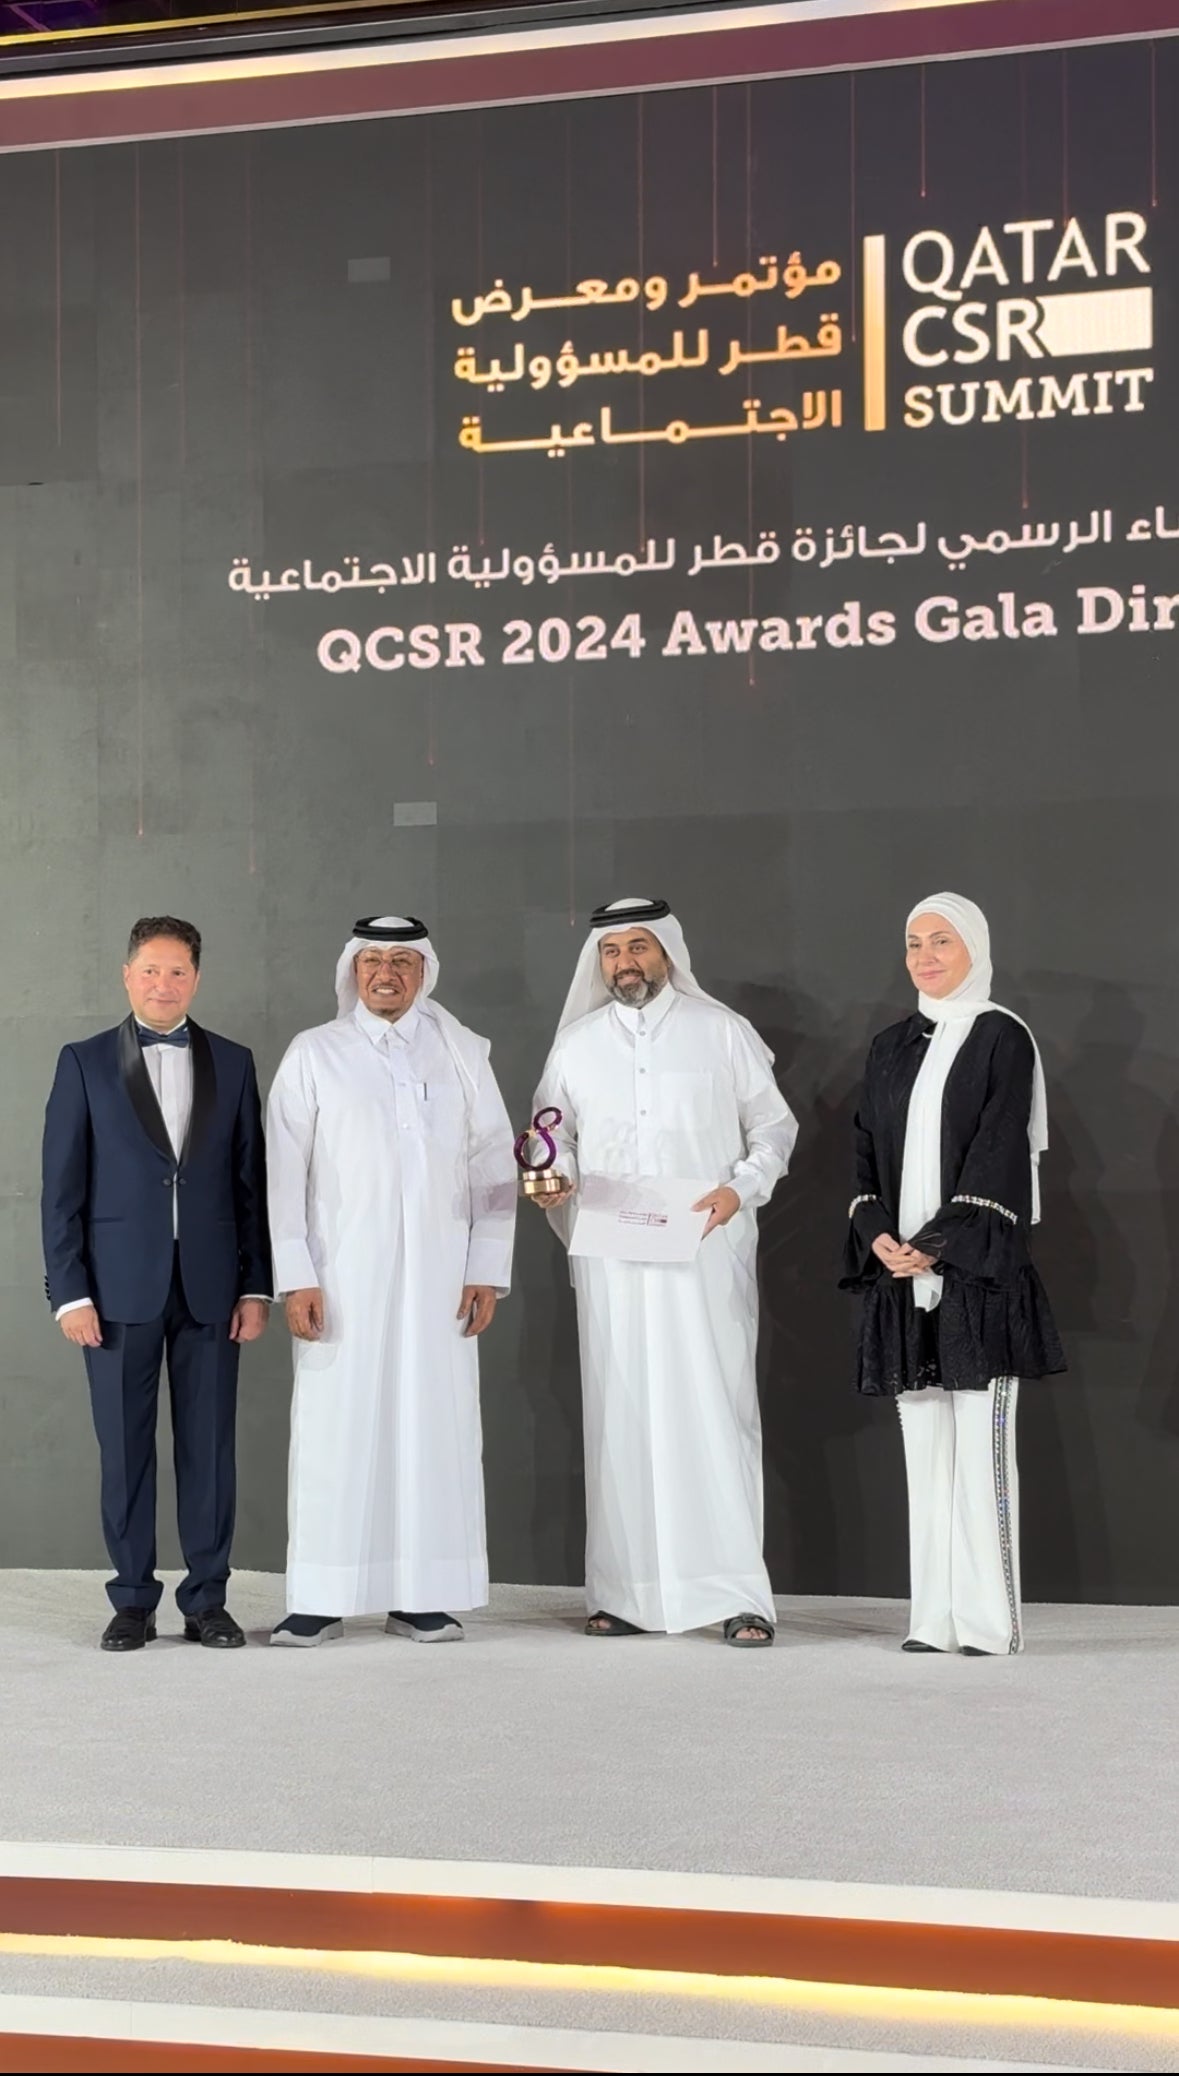 Innovation Cafe Wins Prestigious Award at Qatar CSR Summit